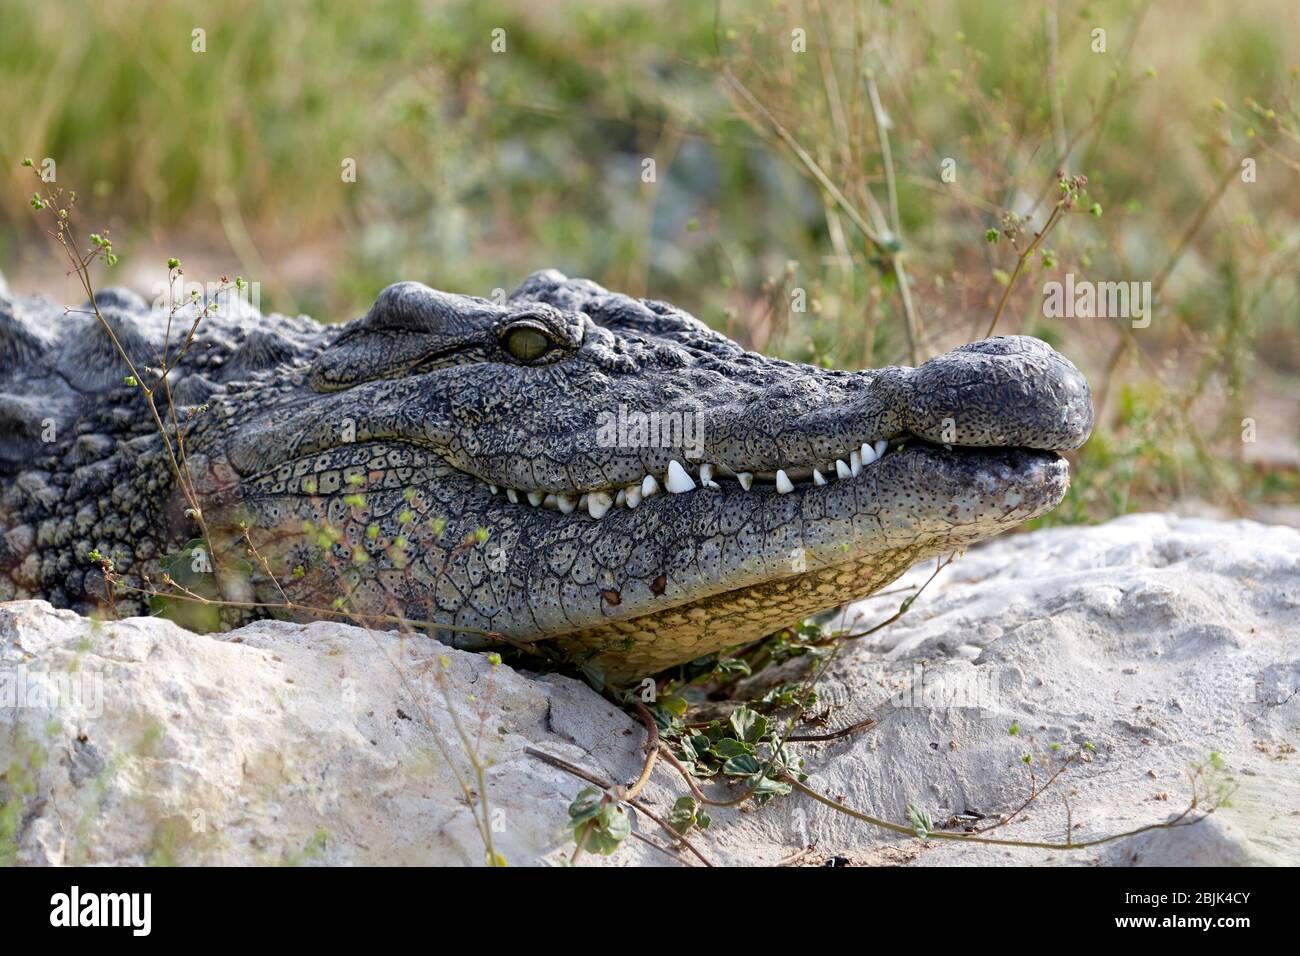 Crocodile close up Stock Photo